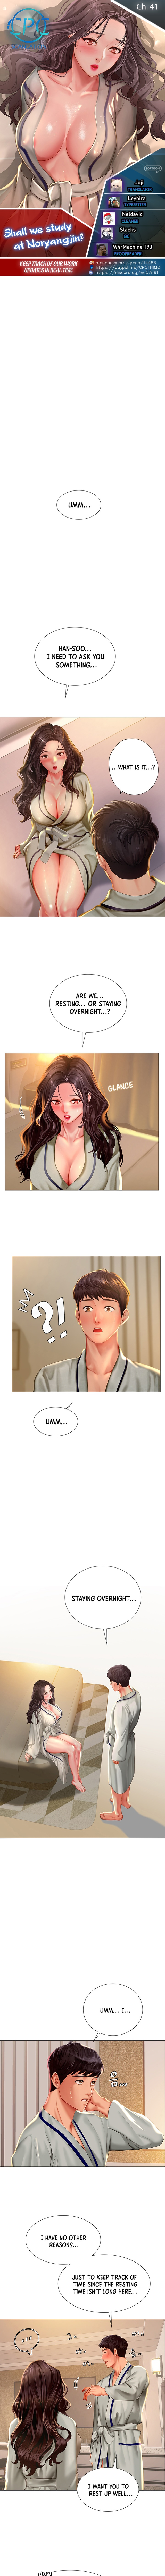 Should I Study at Noryangjin? - Chapter 41 Page 1